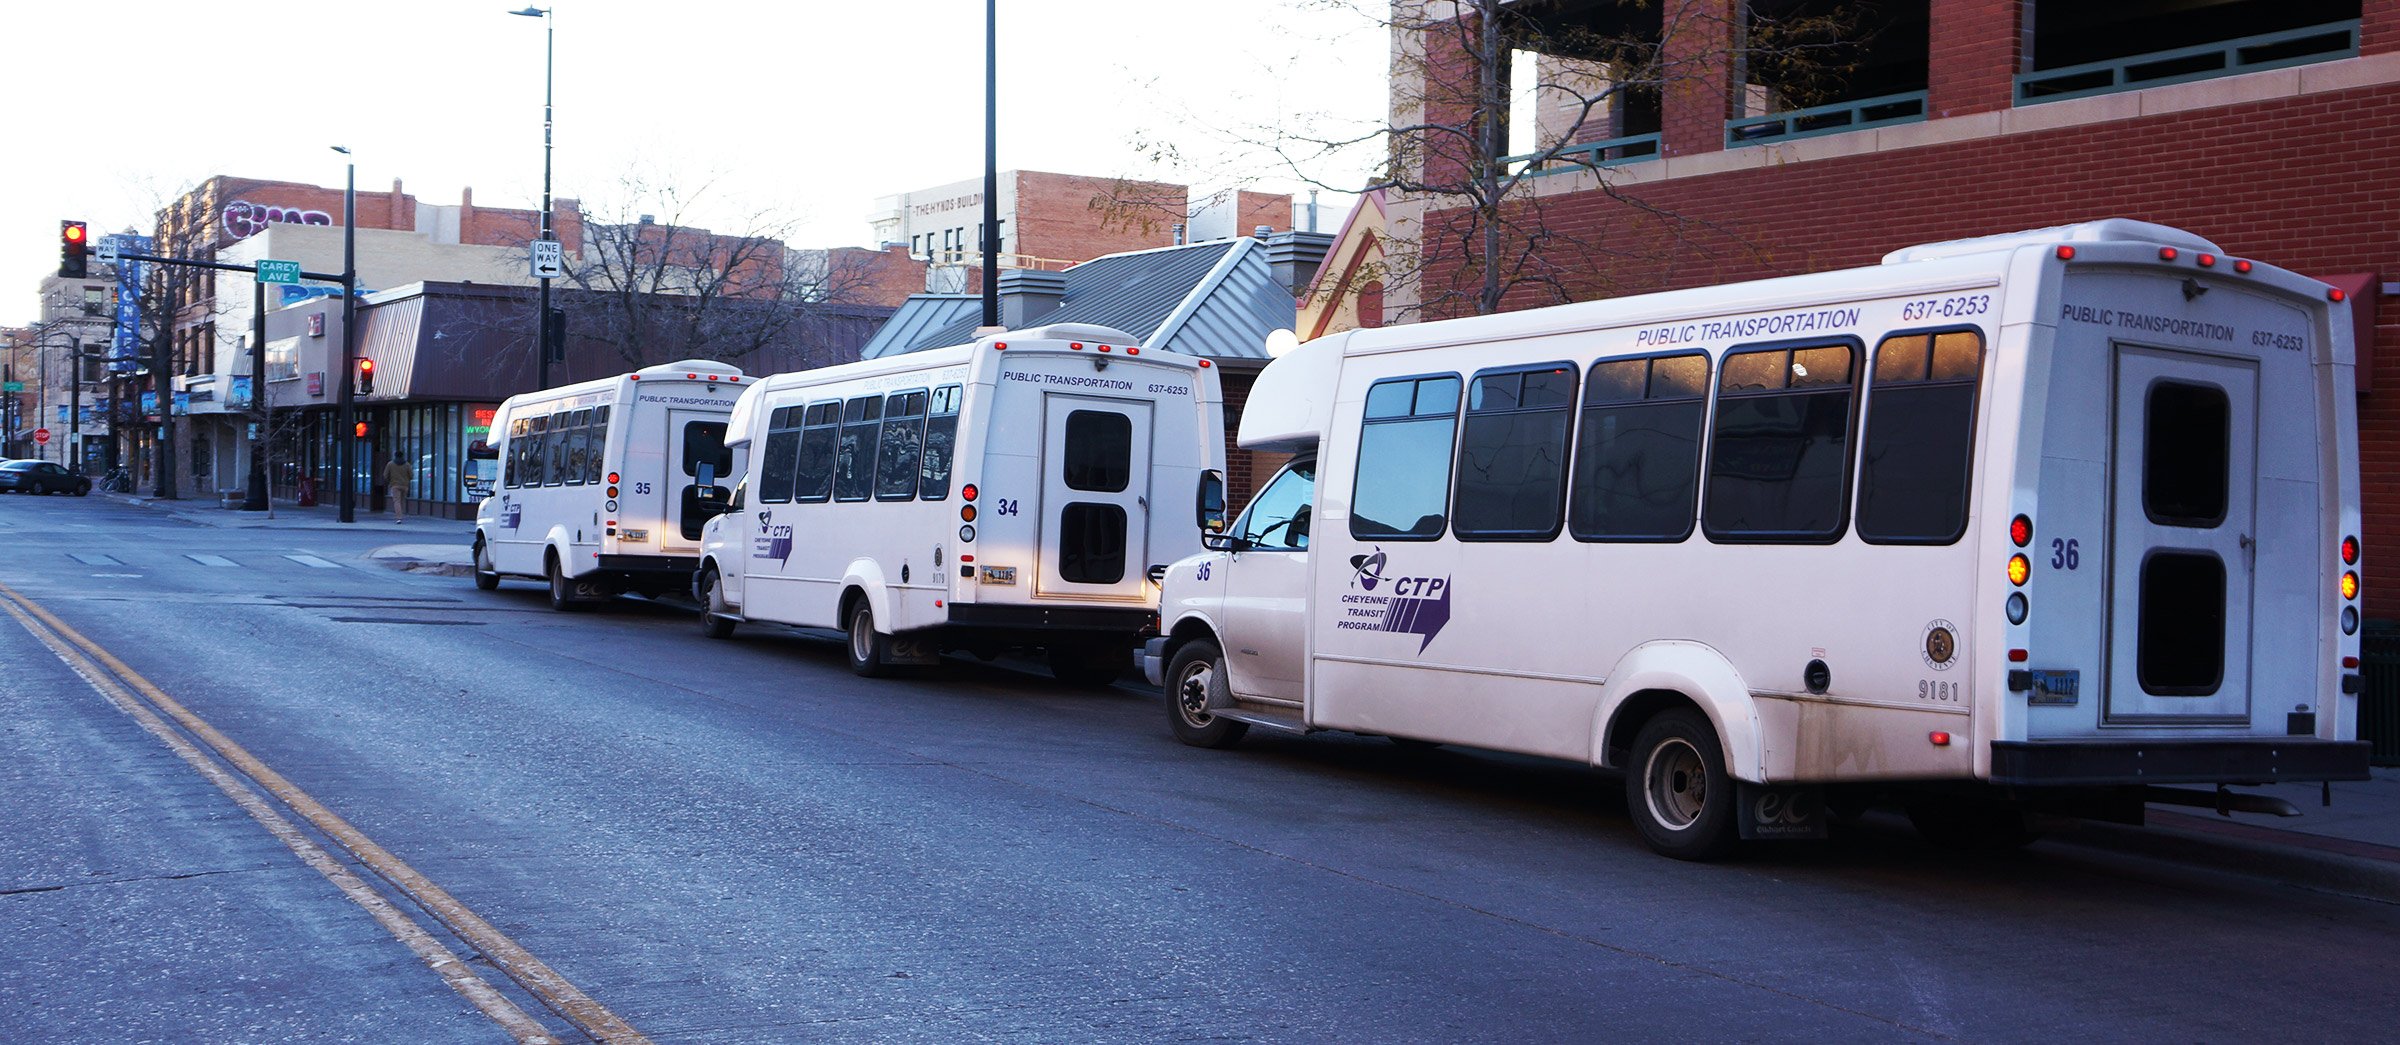 Busses on street